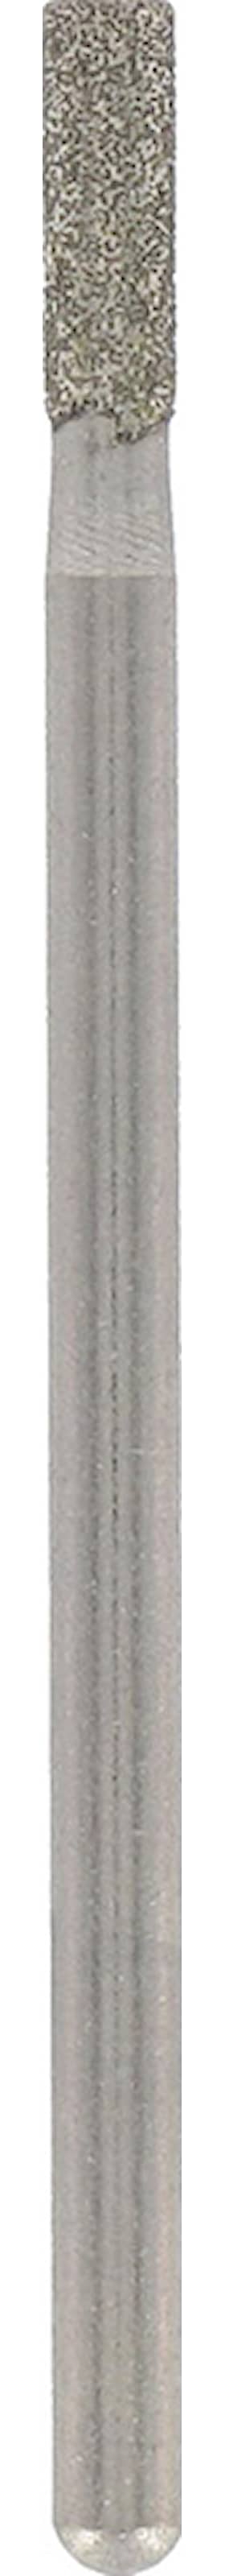 Dremel Diamantslipstift 7122JA 2,4mm 2st